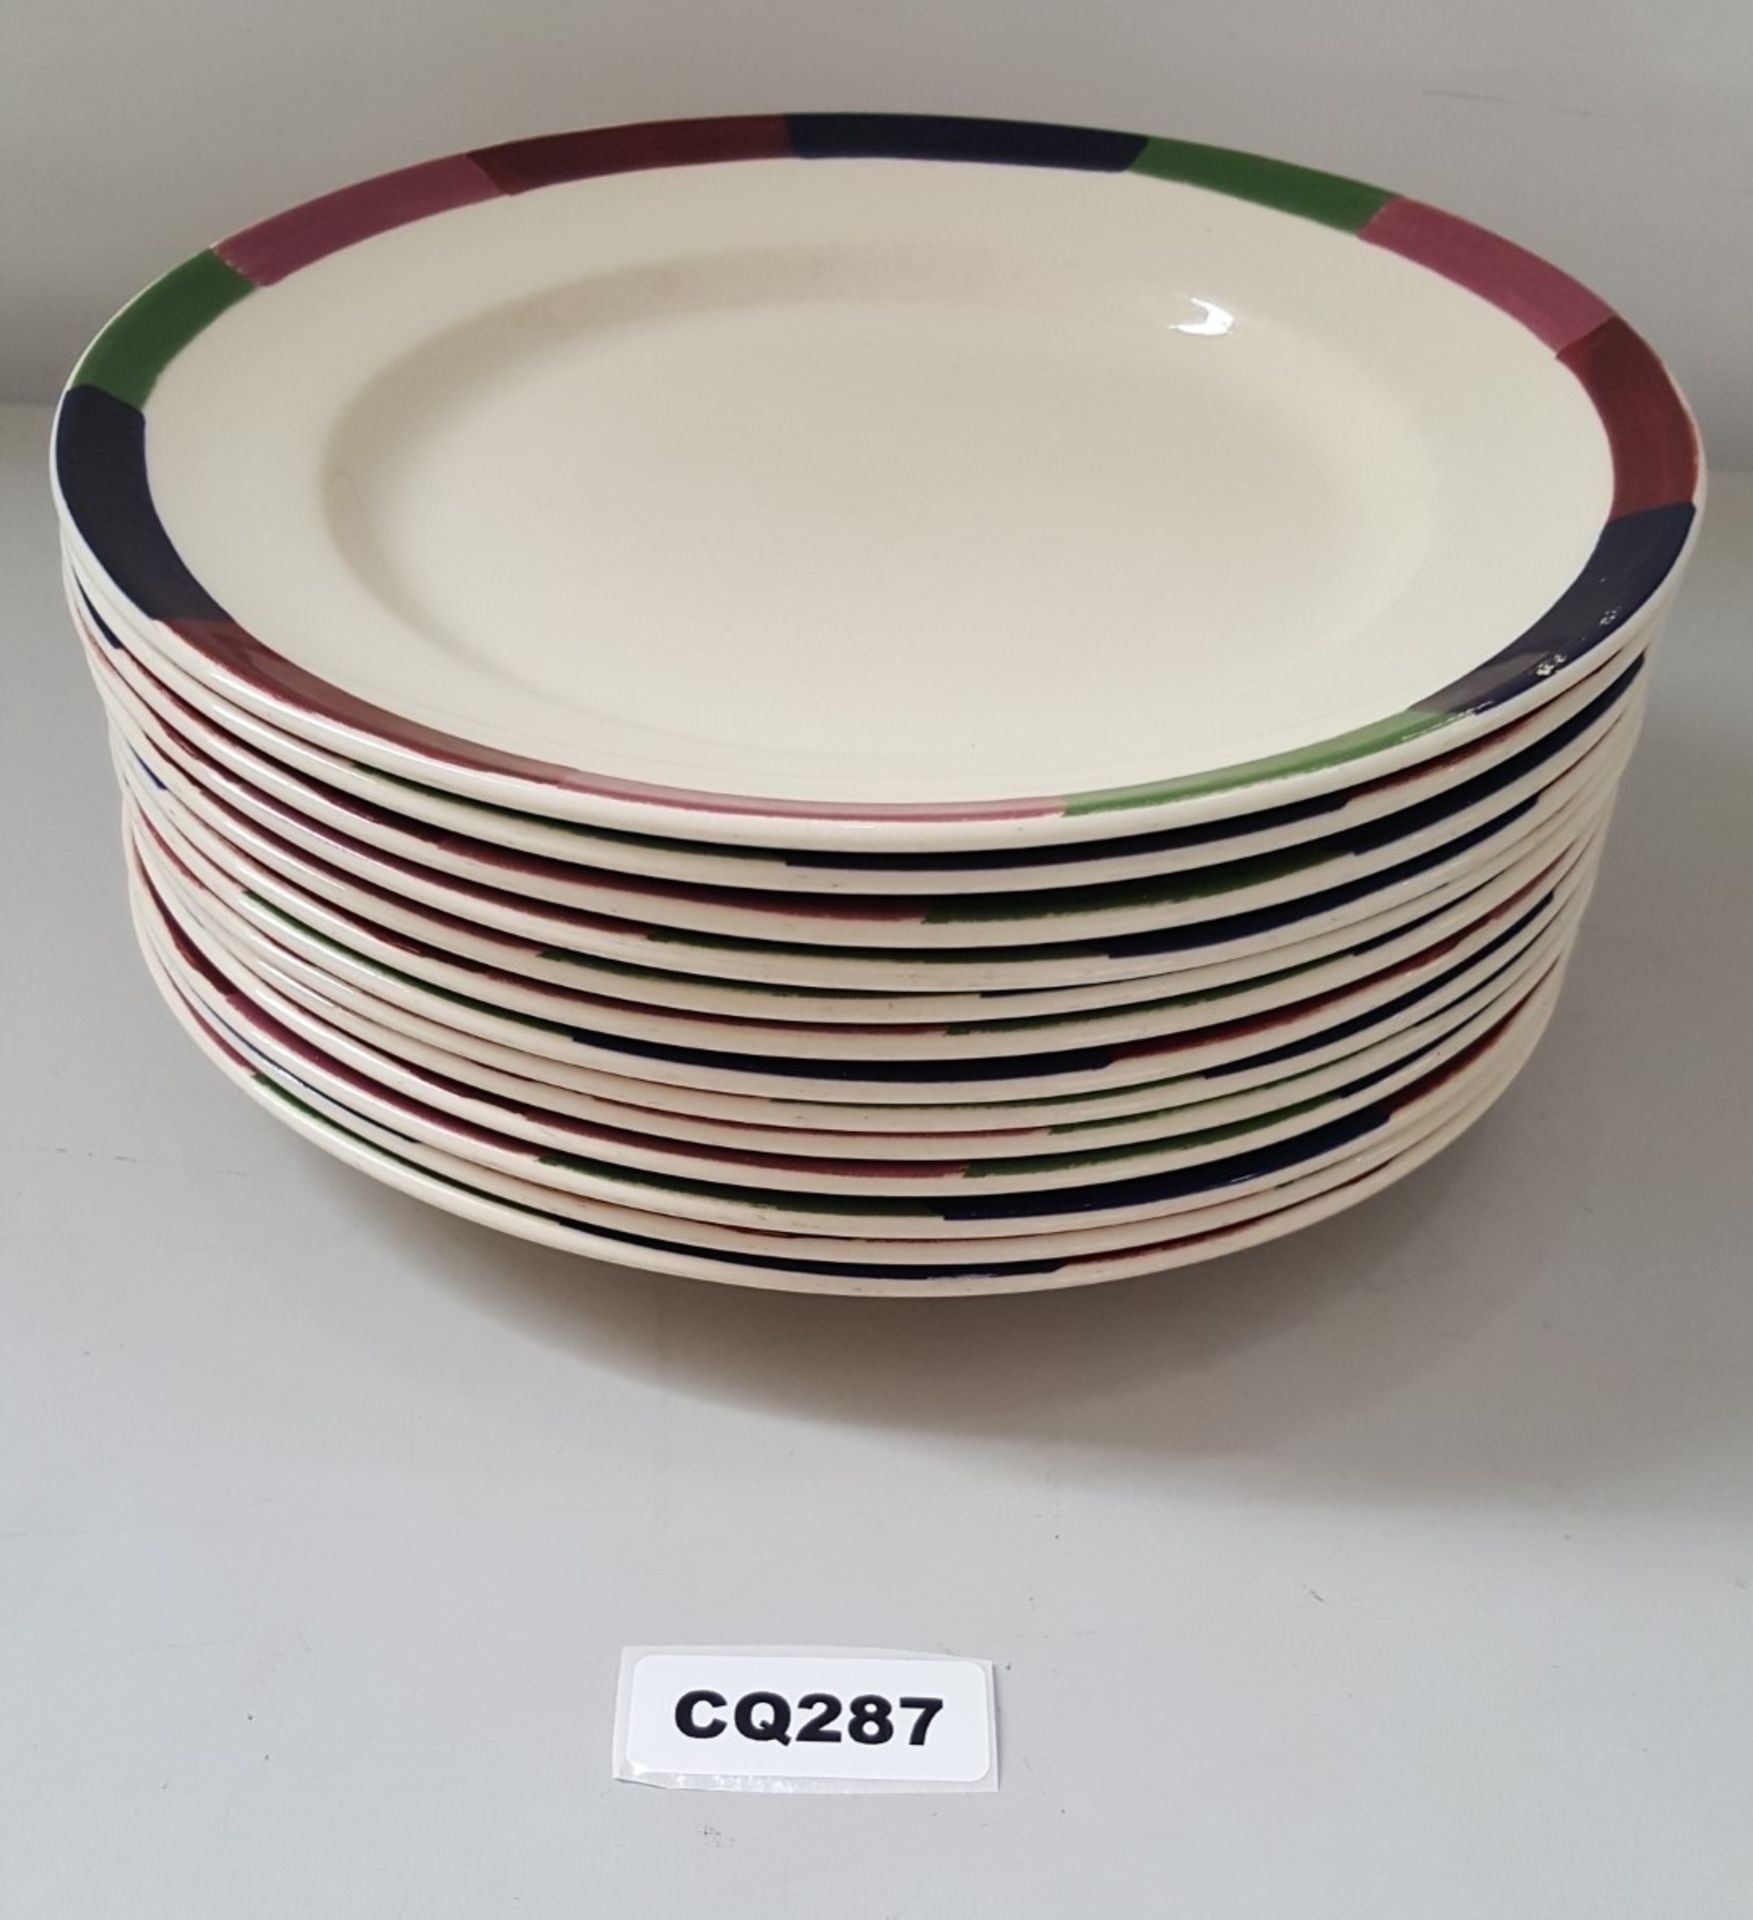 13 x Steelite Harmony Plates Cream With Pattered Egde 27CM - Ref CQ287